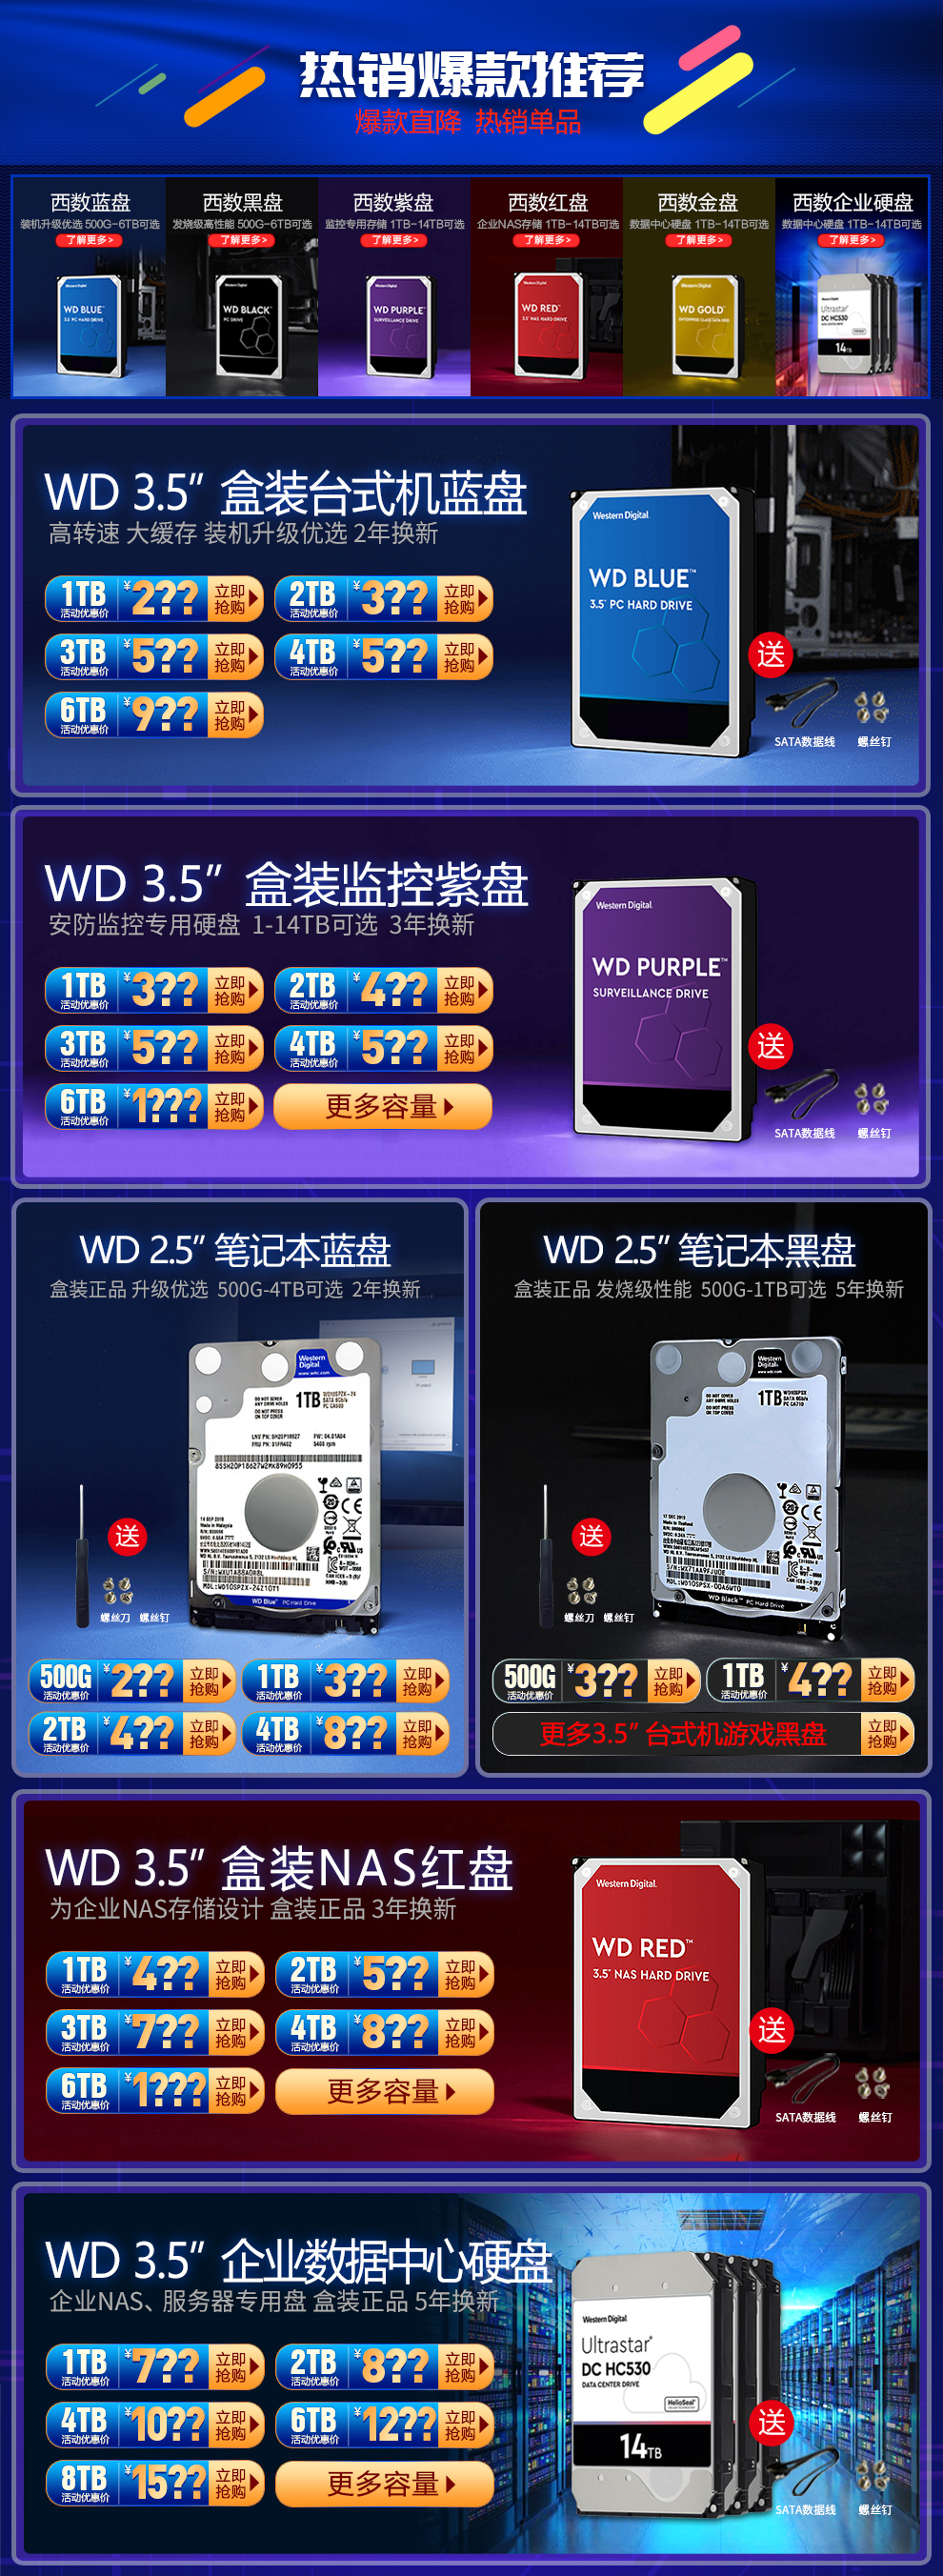 Wd 西部数据紫盘1tb 5400转sata6gb S 64m 安防监控硬盘 Wd10ejrx 图片价格品牌报价 京东